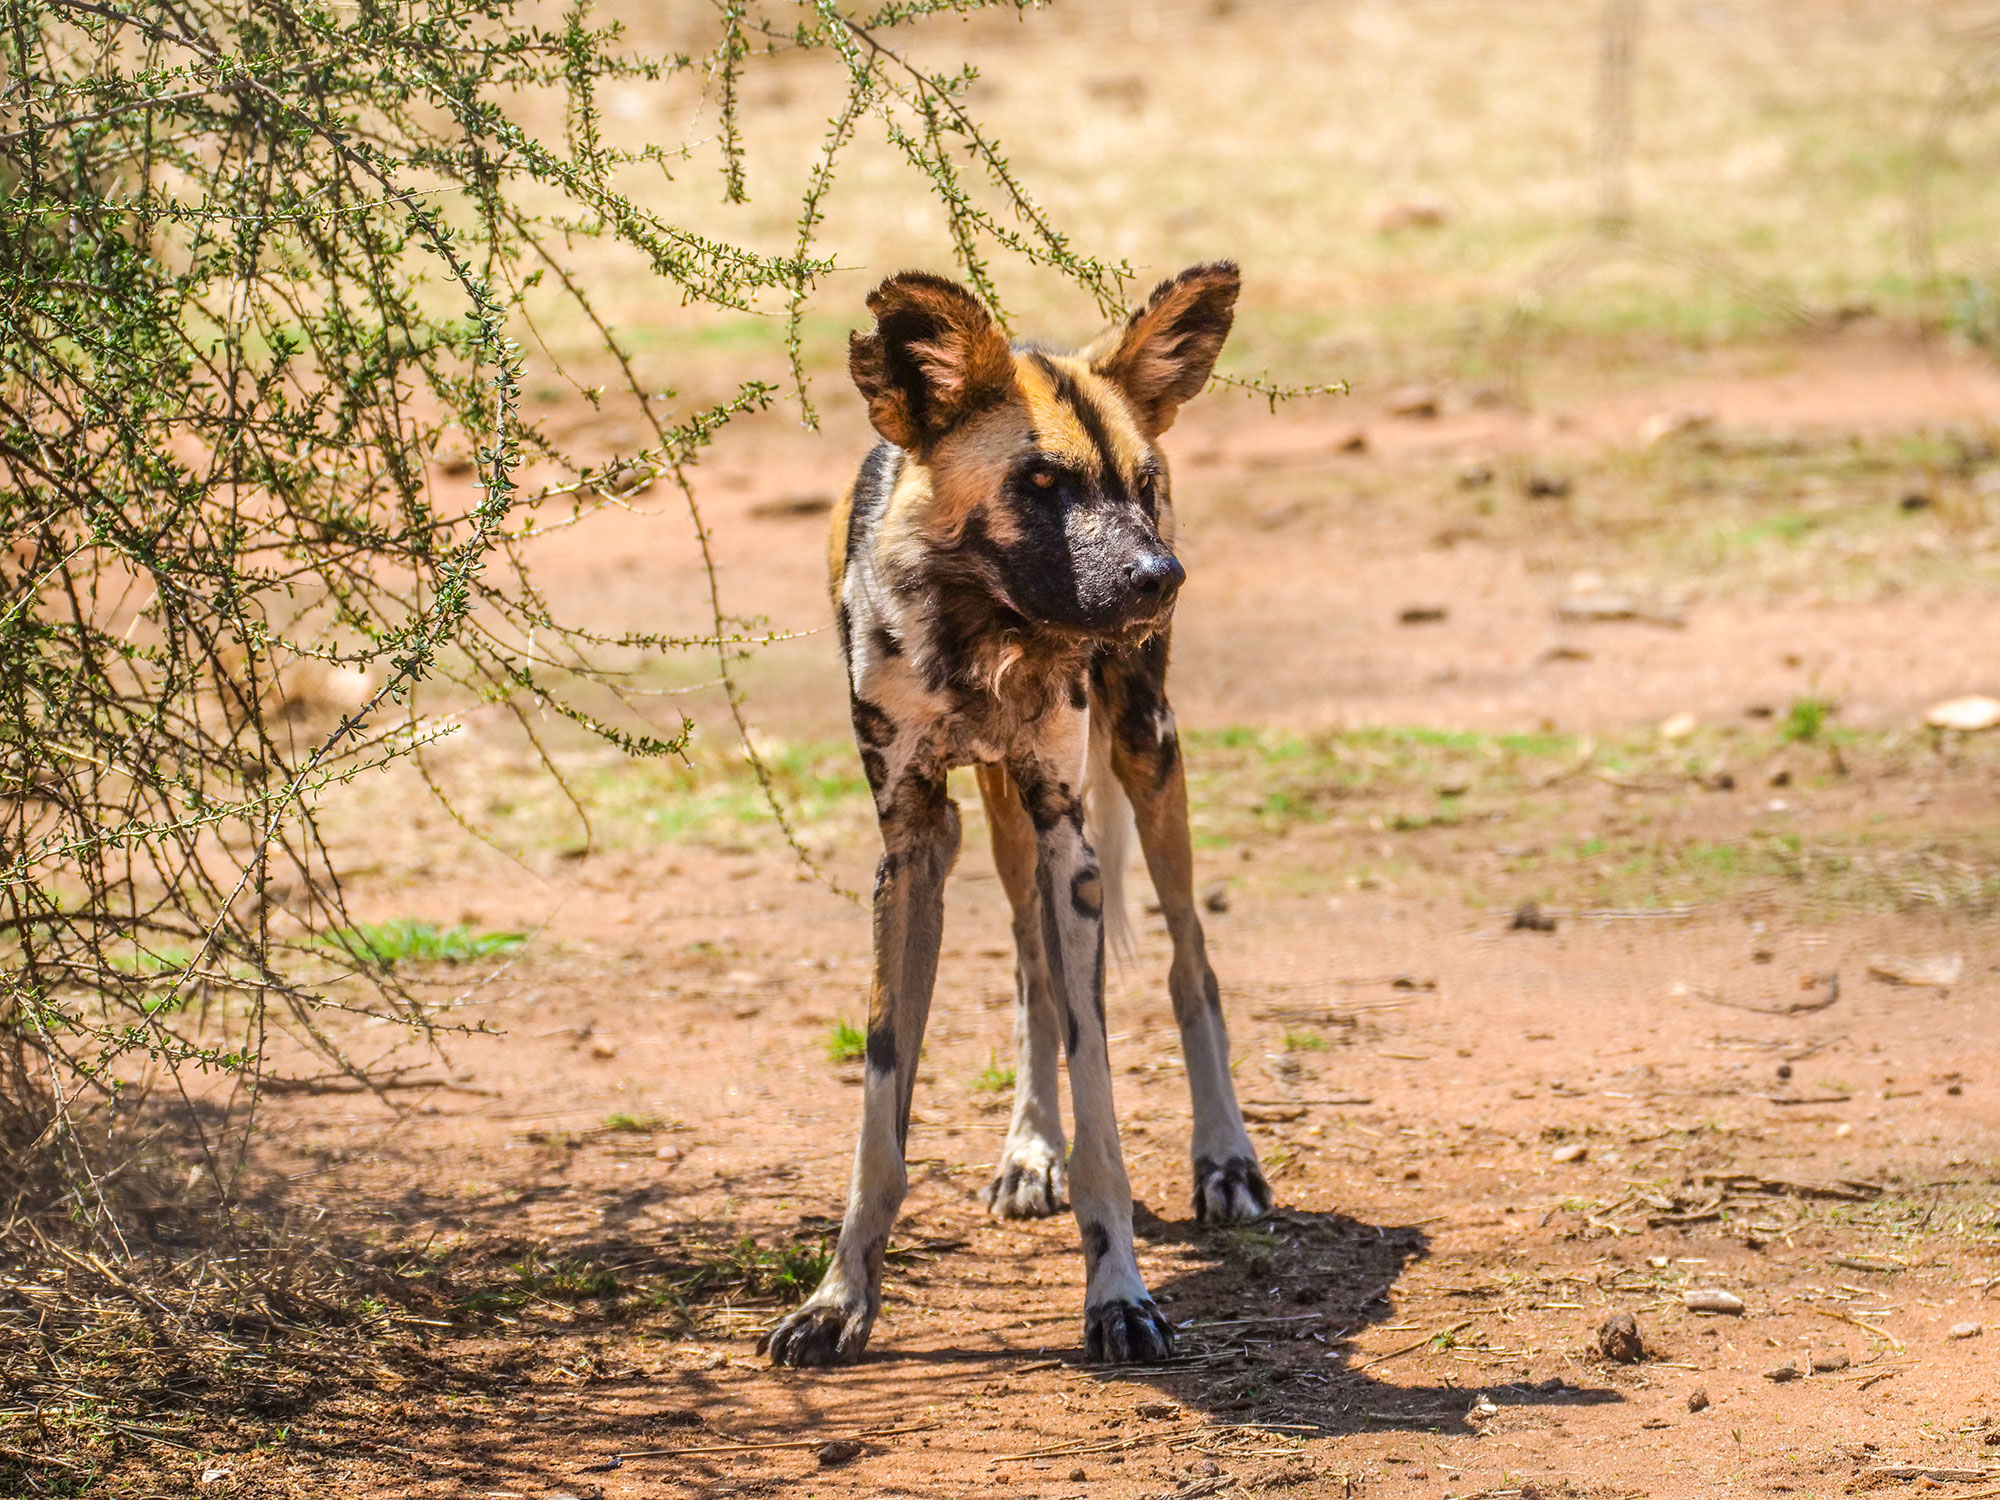 African Wild Dog at N/a’an ku sê (Naankuse) Wildlife Sanctuary in Namibia, Africa